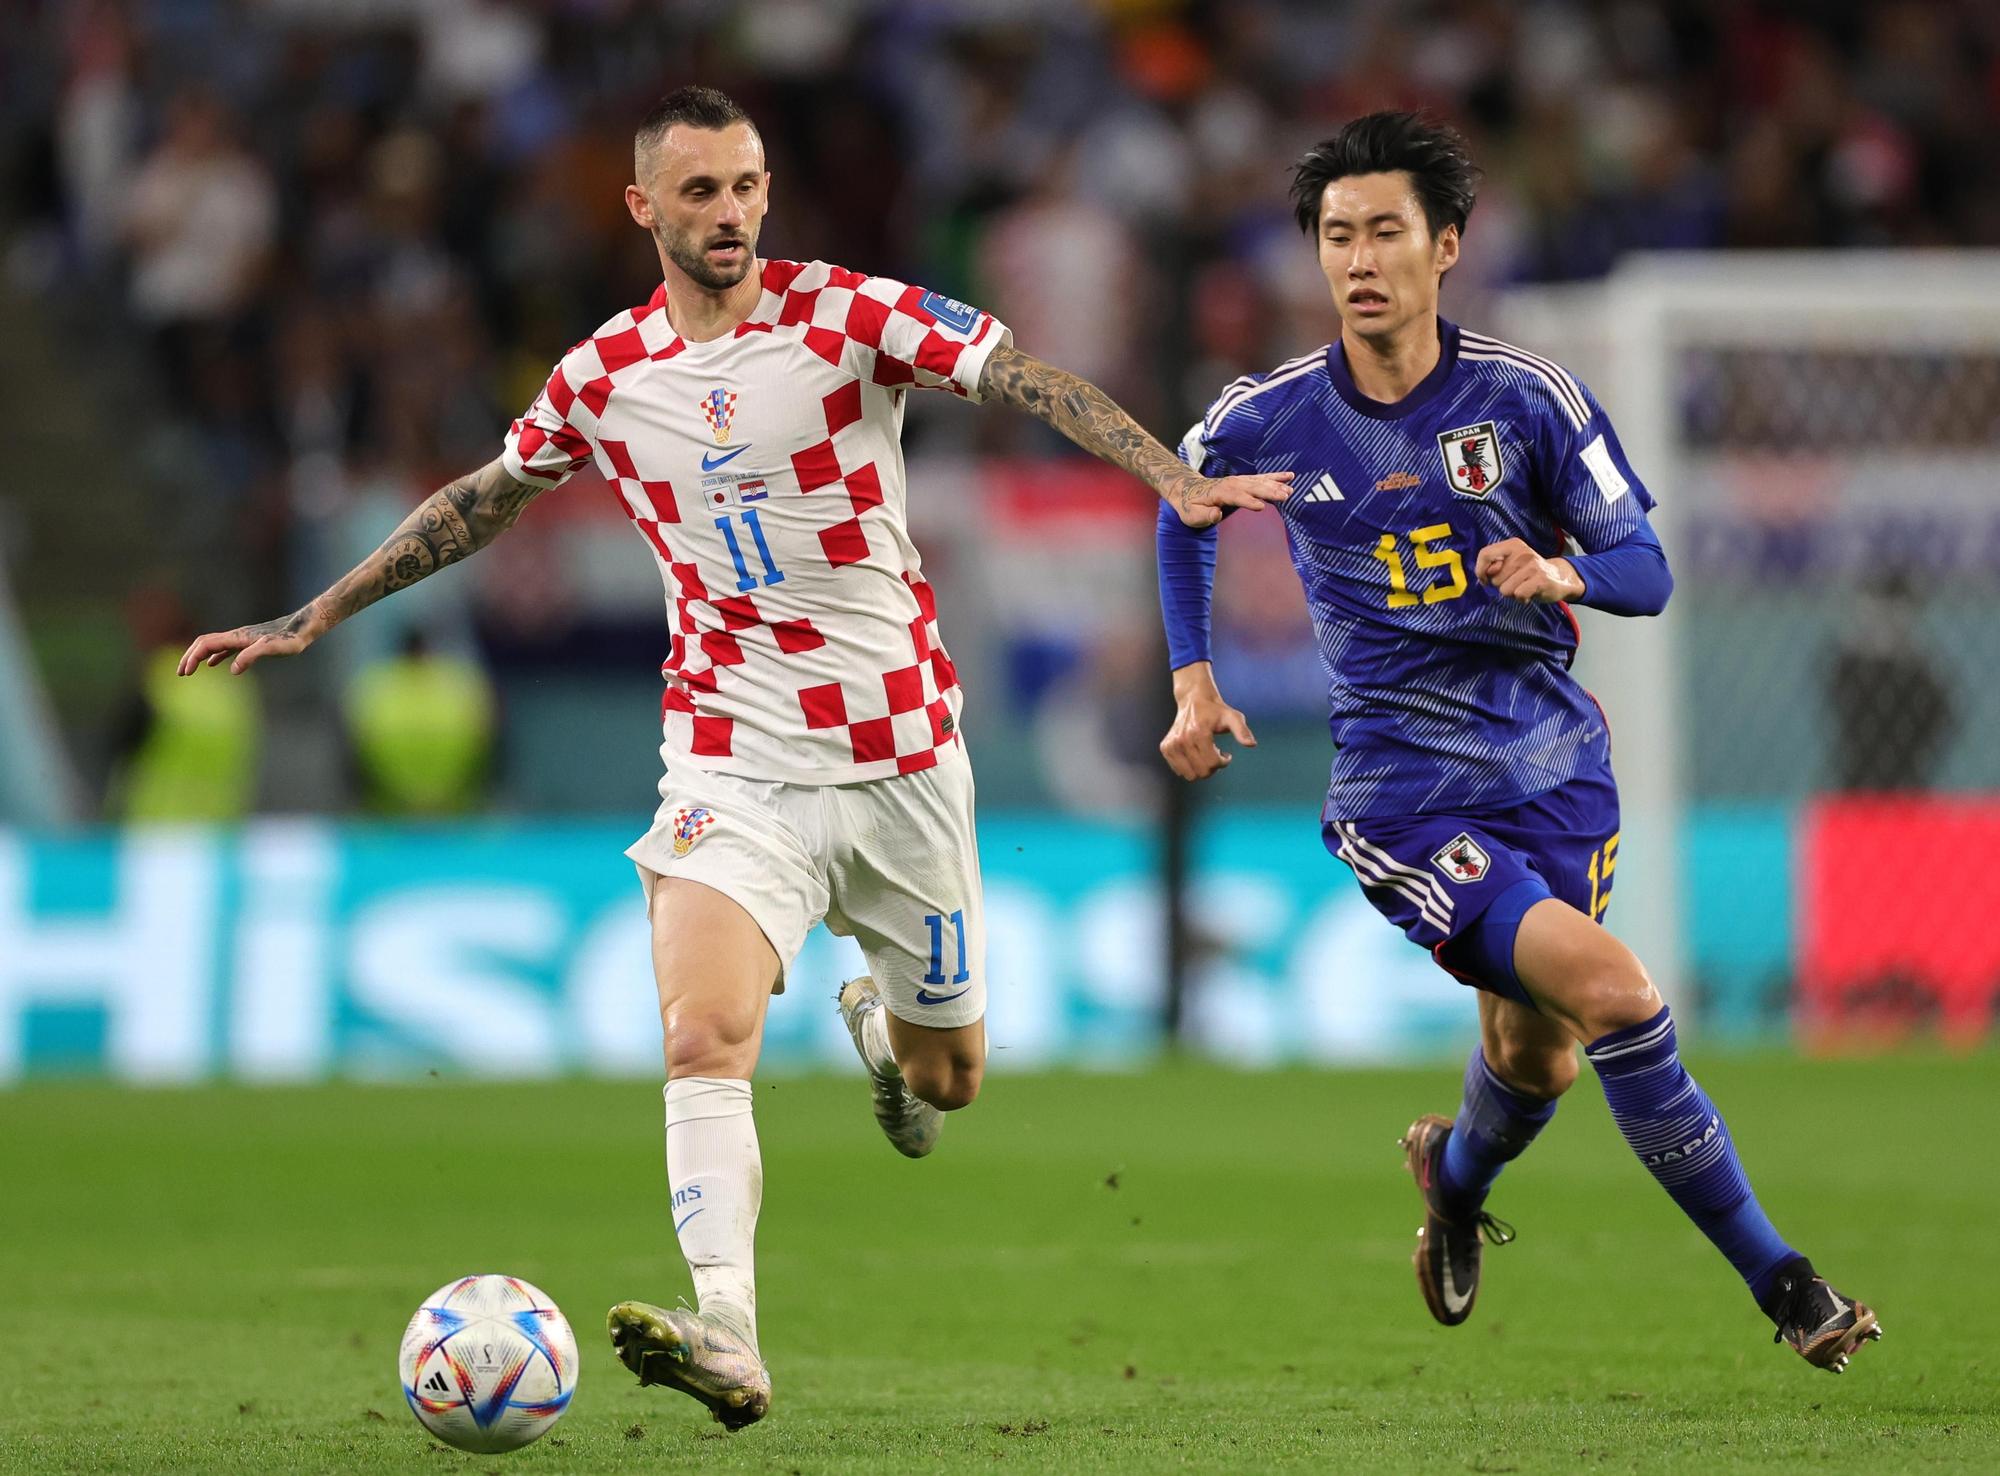 FIFA World Cup 2022 - Round of 16 Japan vs Croatia